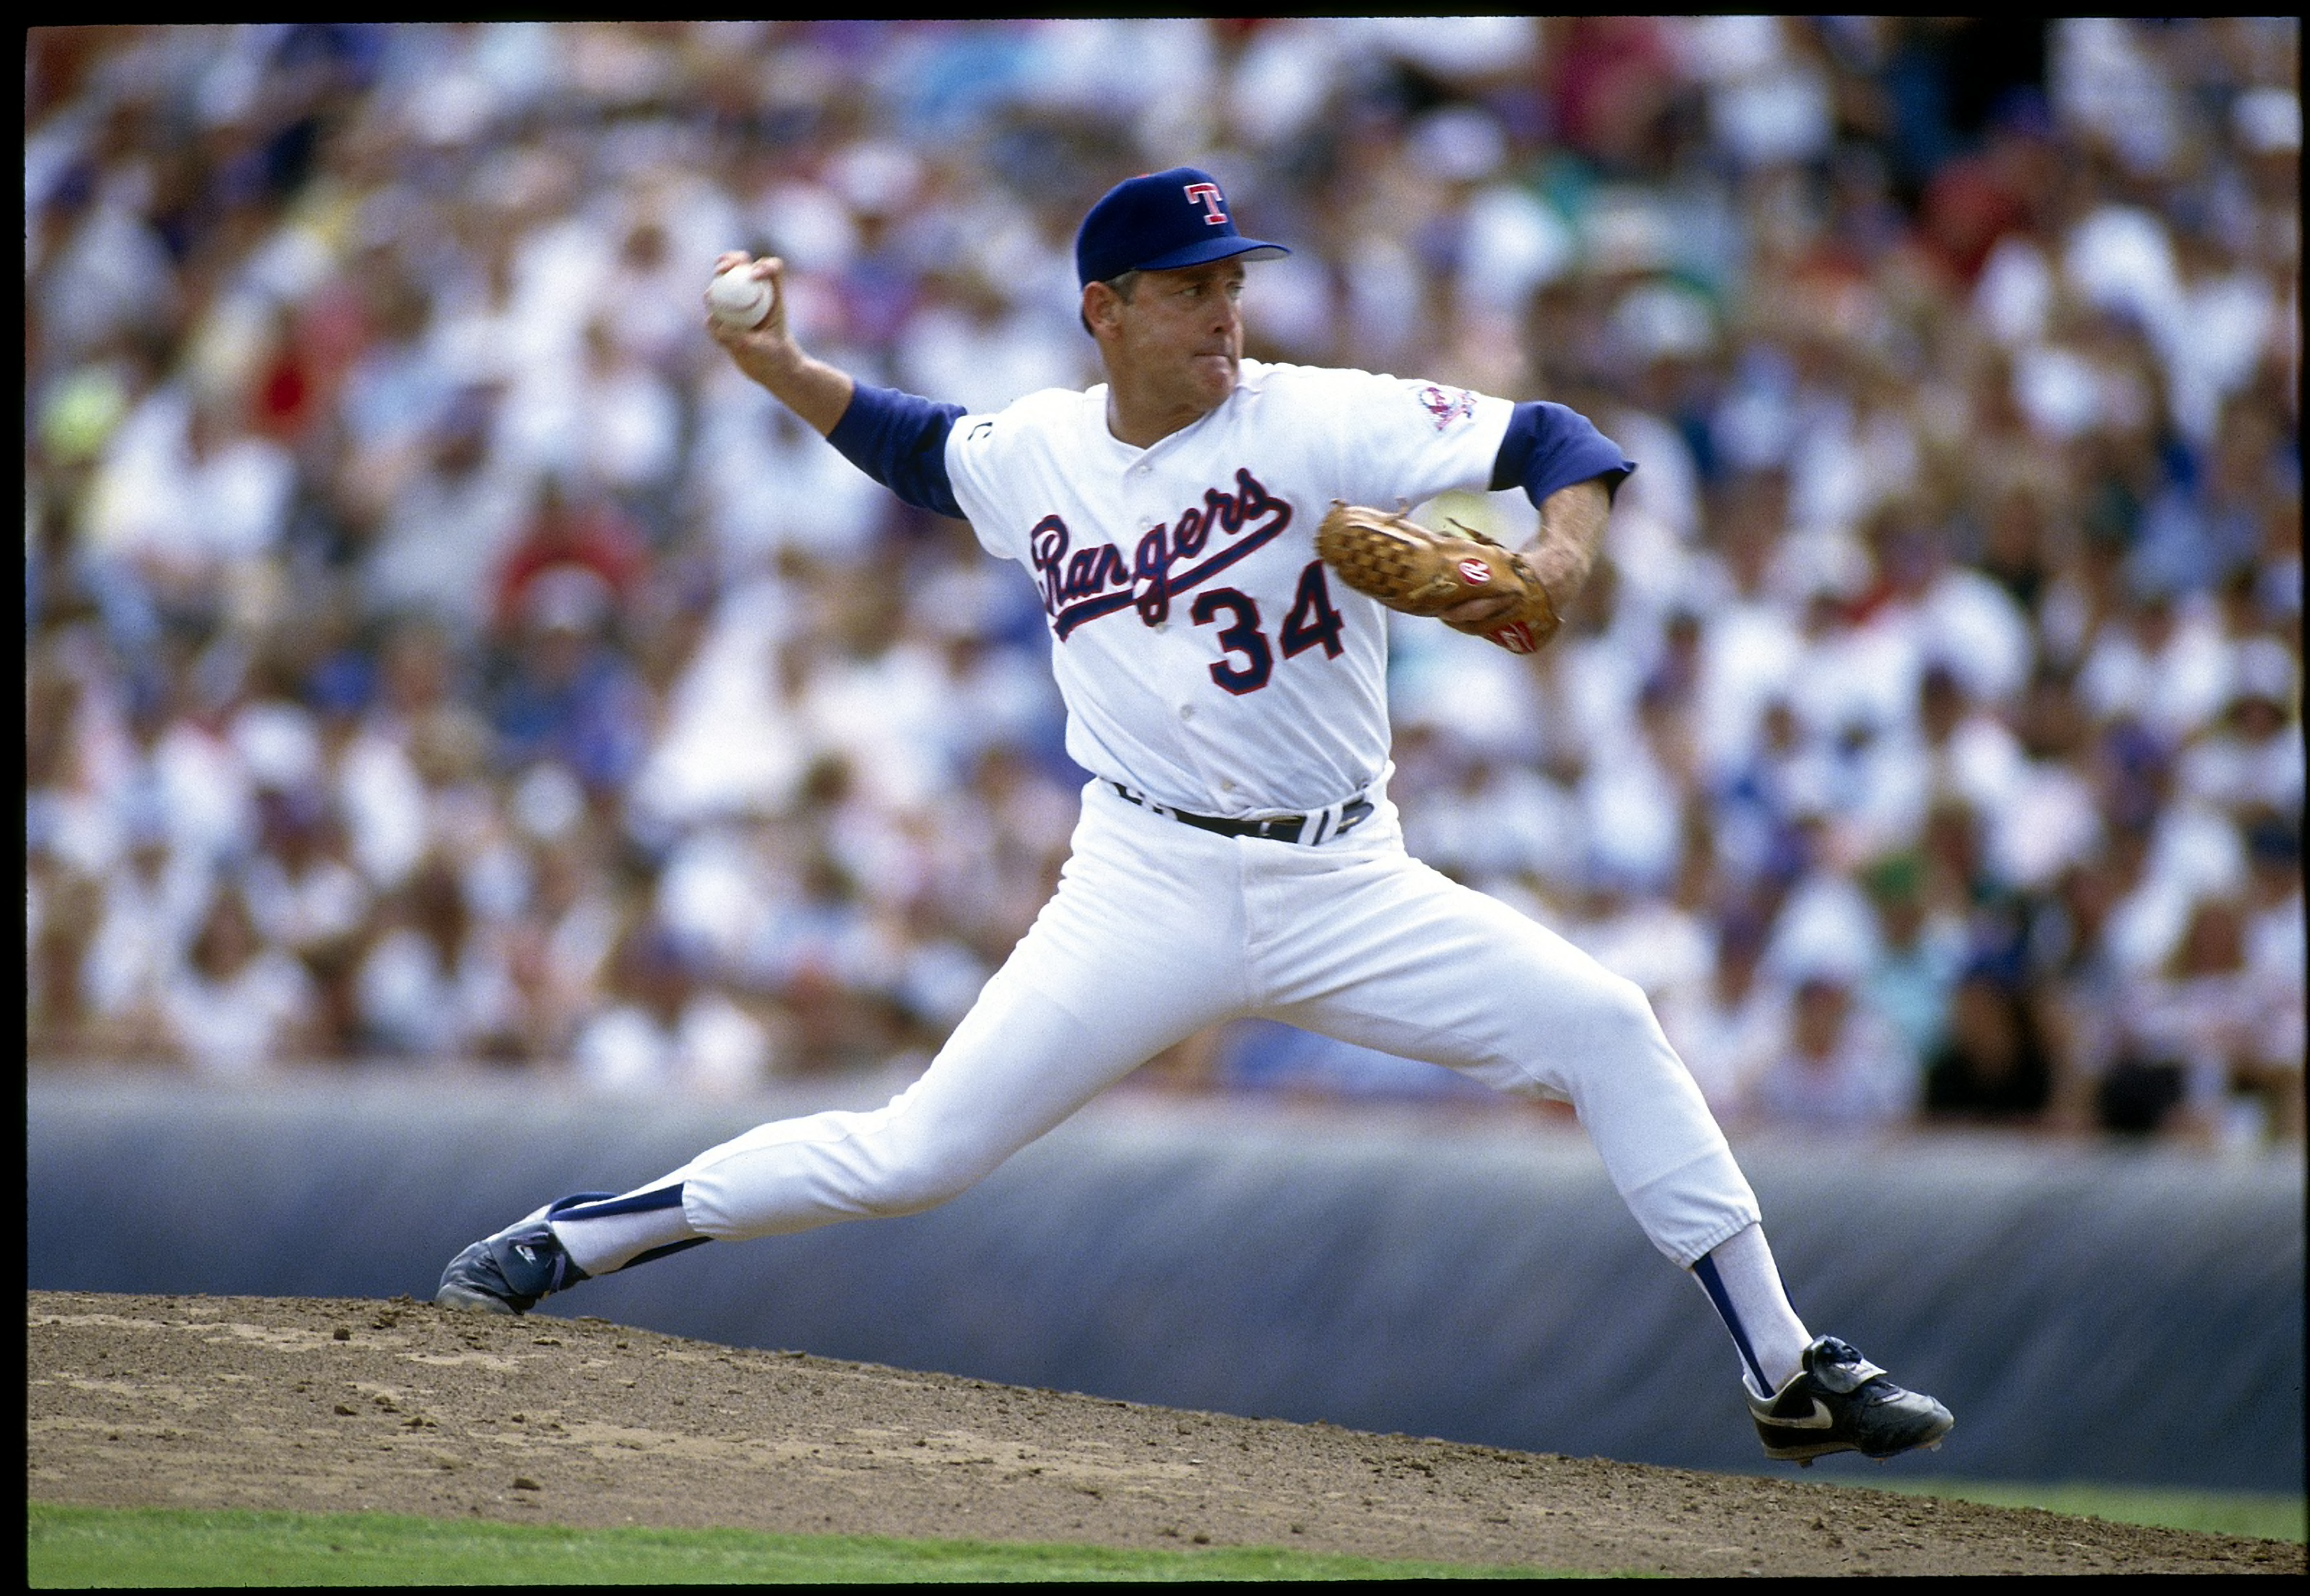 Career in a Year Photos 1999: Nolan Ryan inducted into Baseball